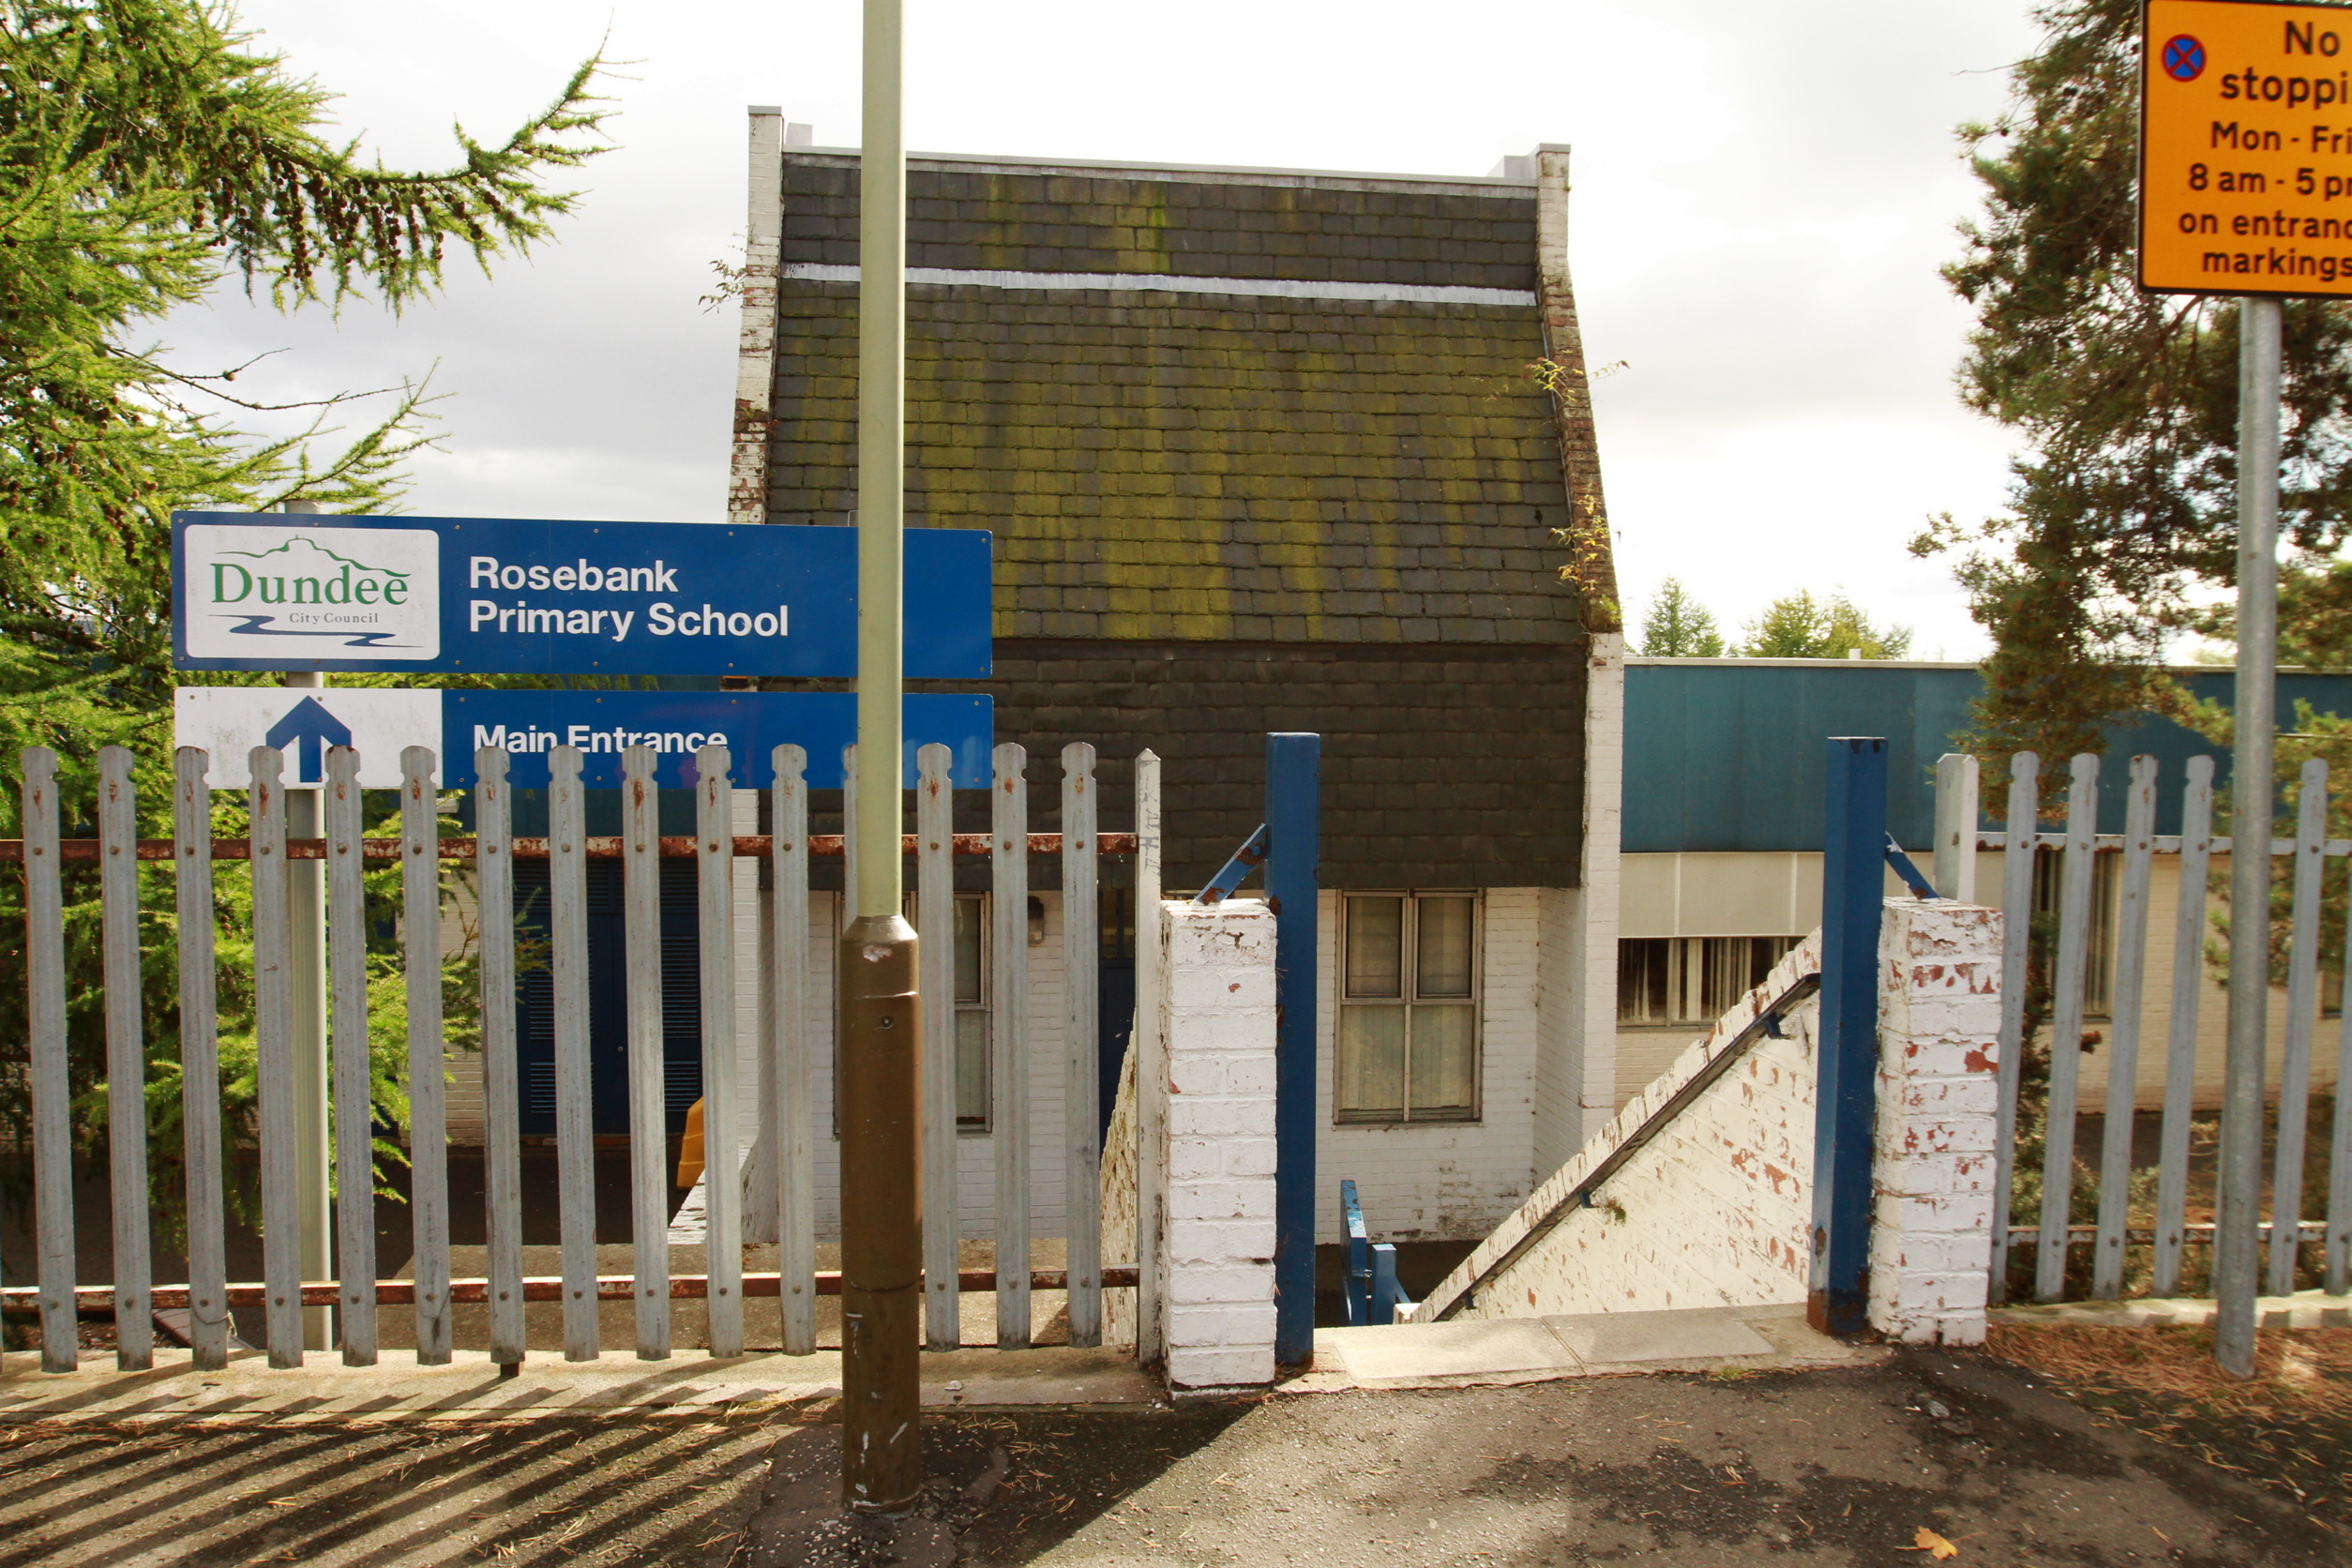 Rosebank Primary School is to close in 2018.